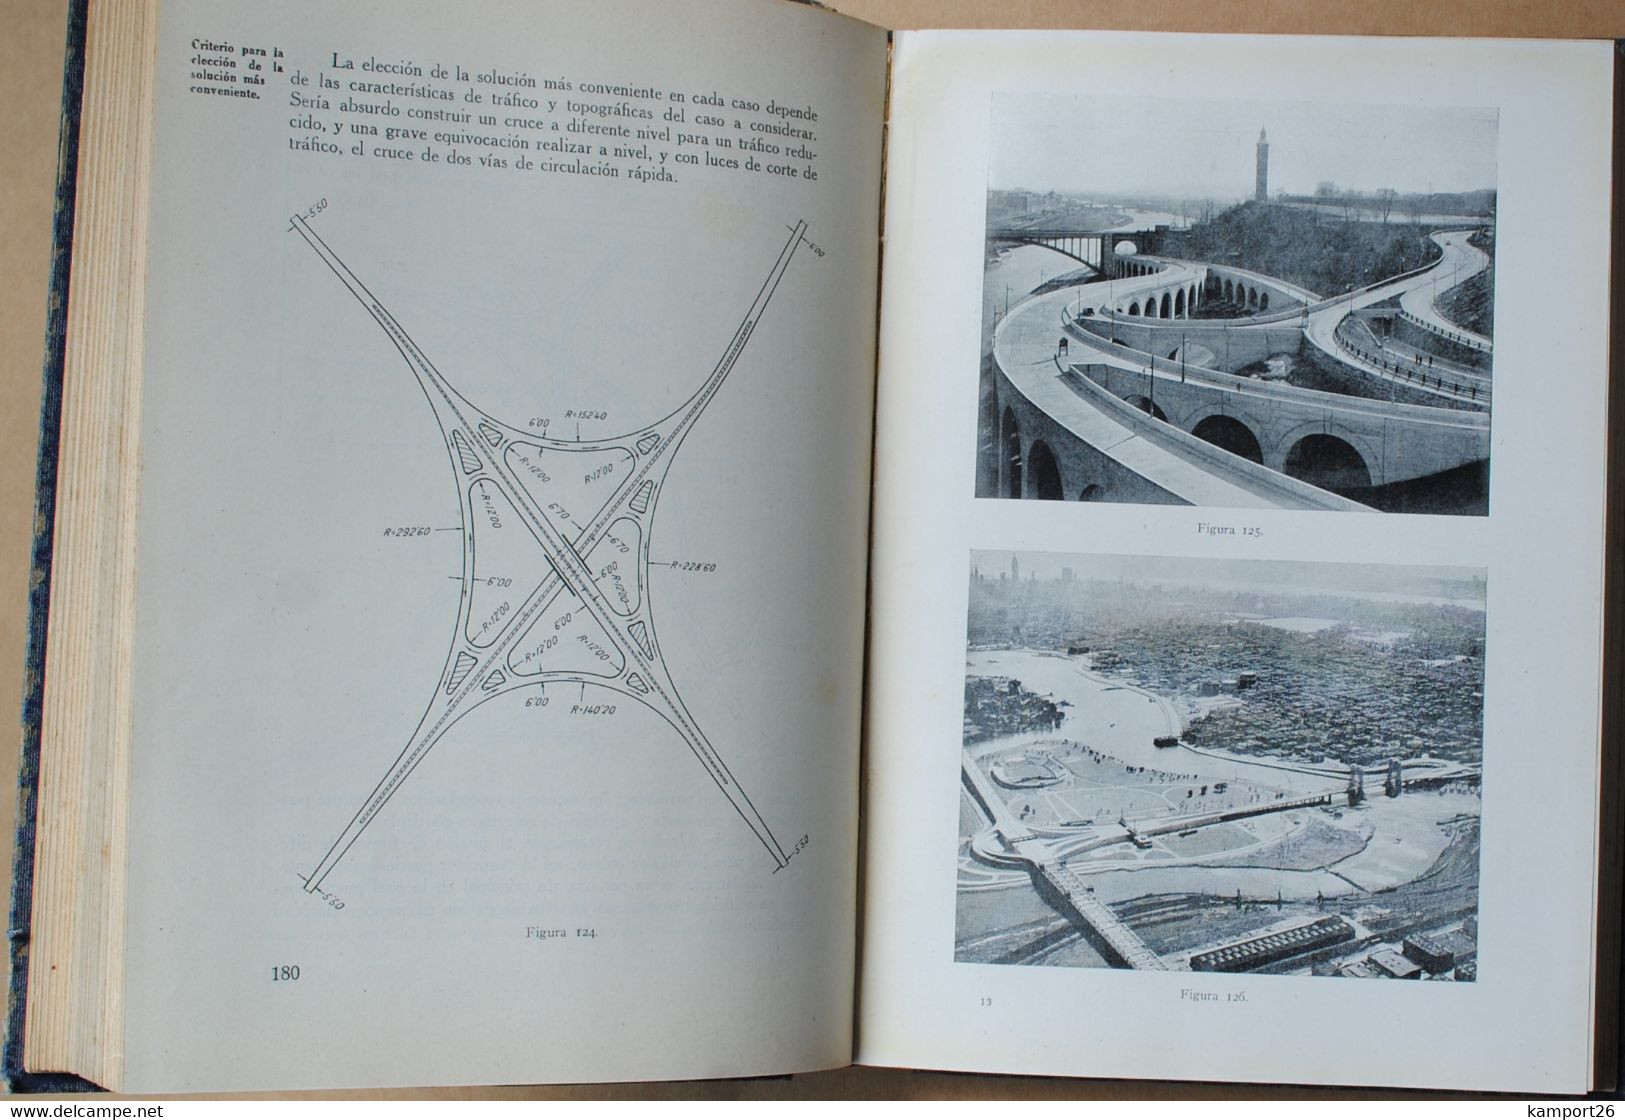 1949 CAMINOS Jose Luis Escario ILLUSTRÉ Roads ILLUSTRATED History TECHNOLOGY Сonstruction - Practical